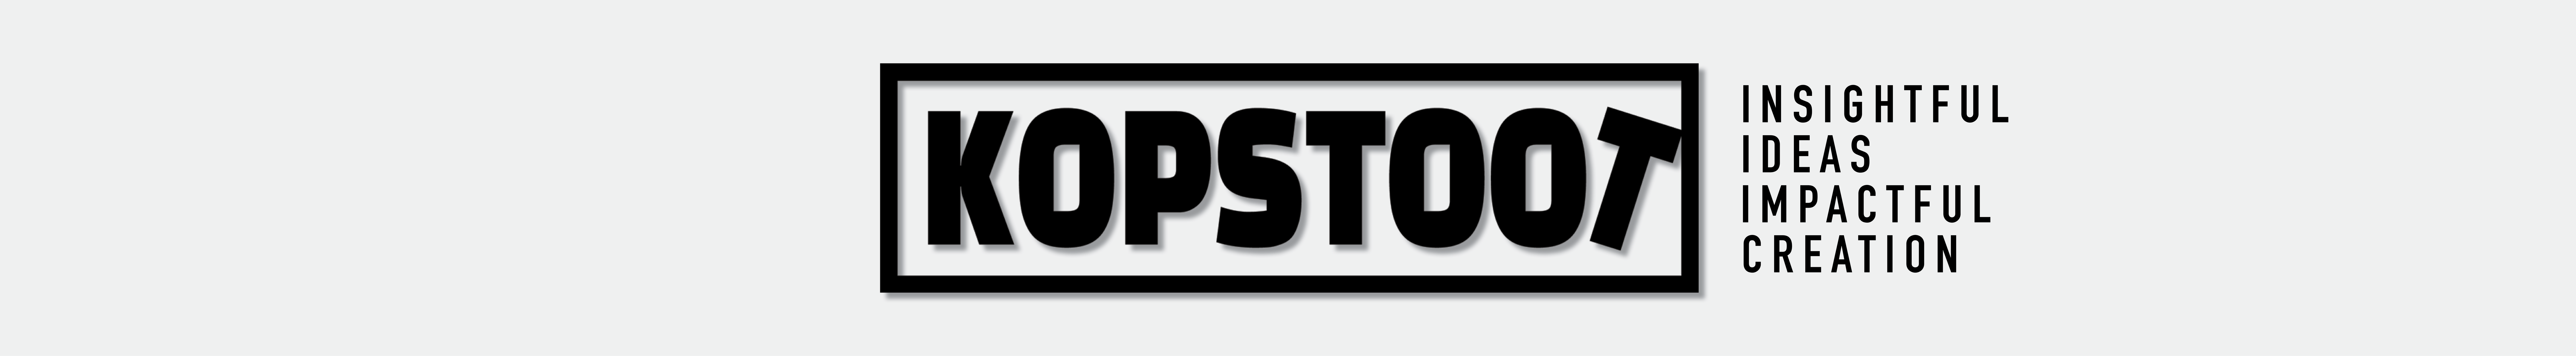 KOPSTOOT .BE's profile banner